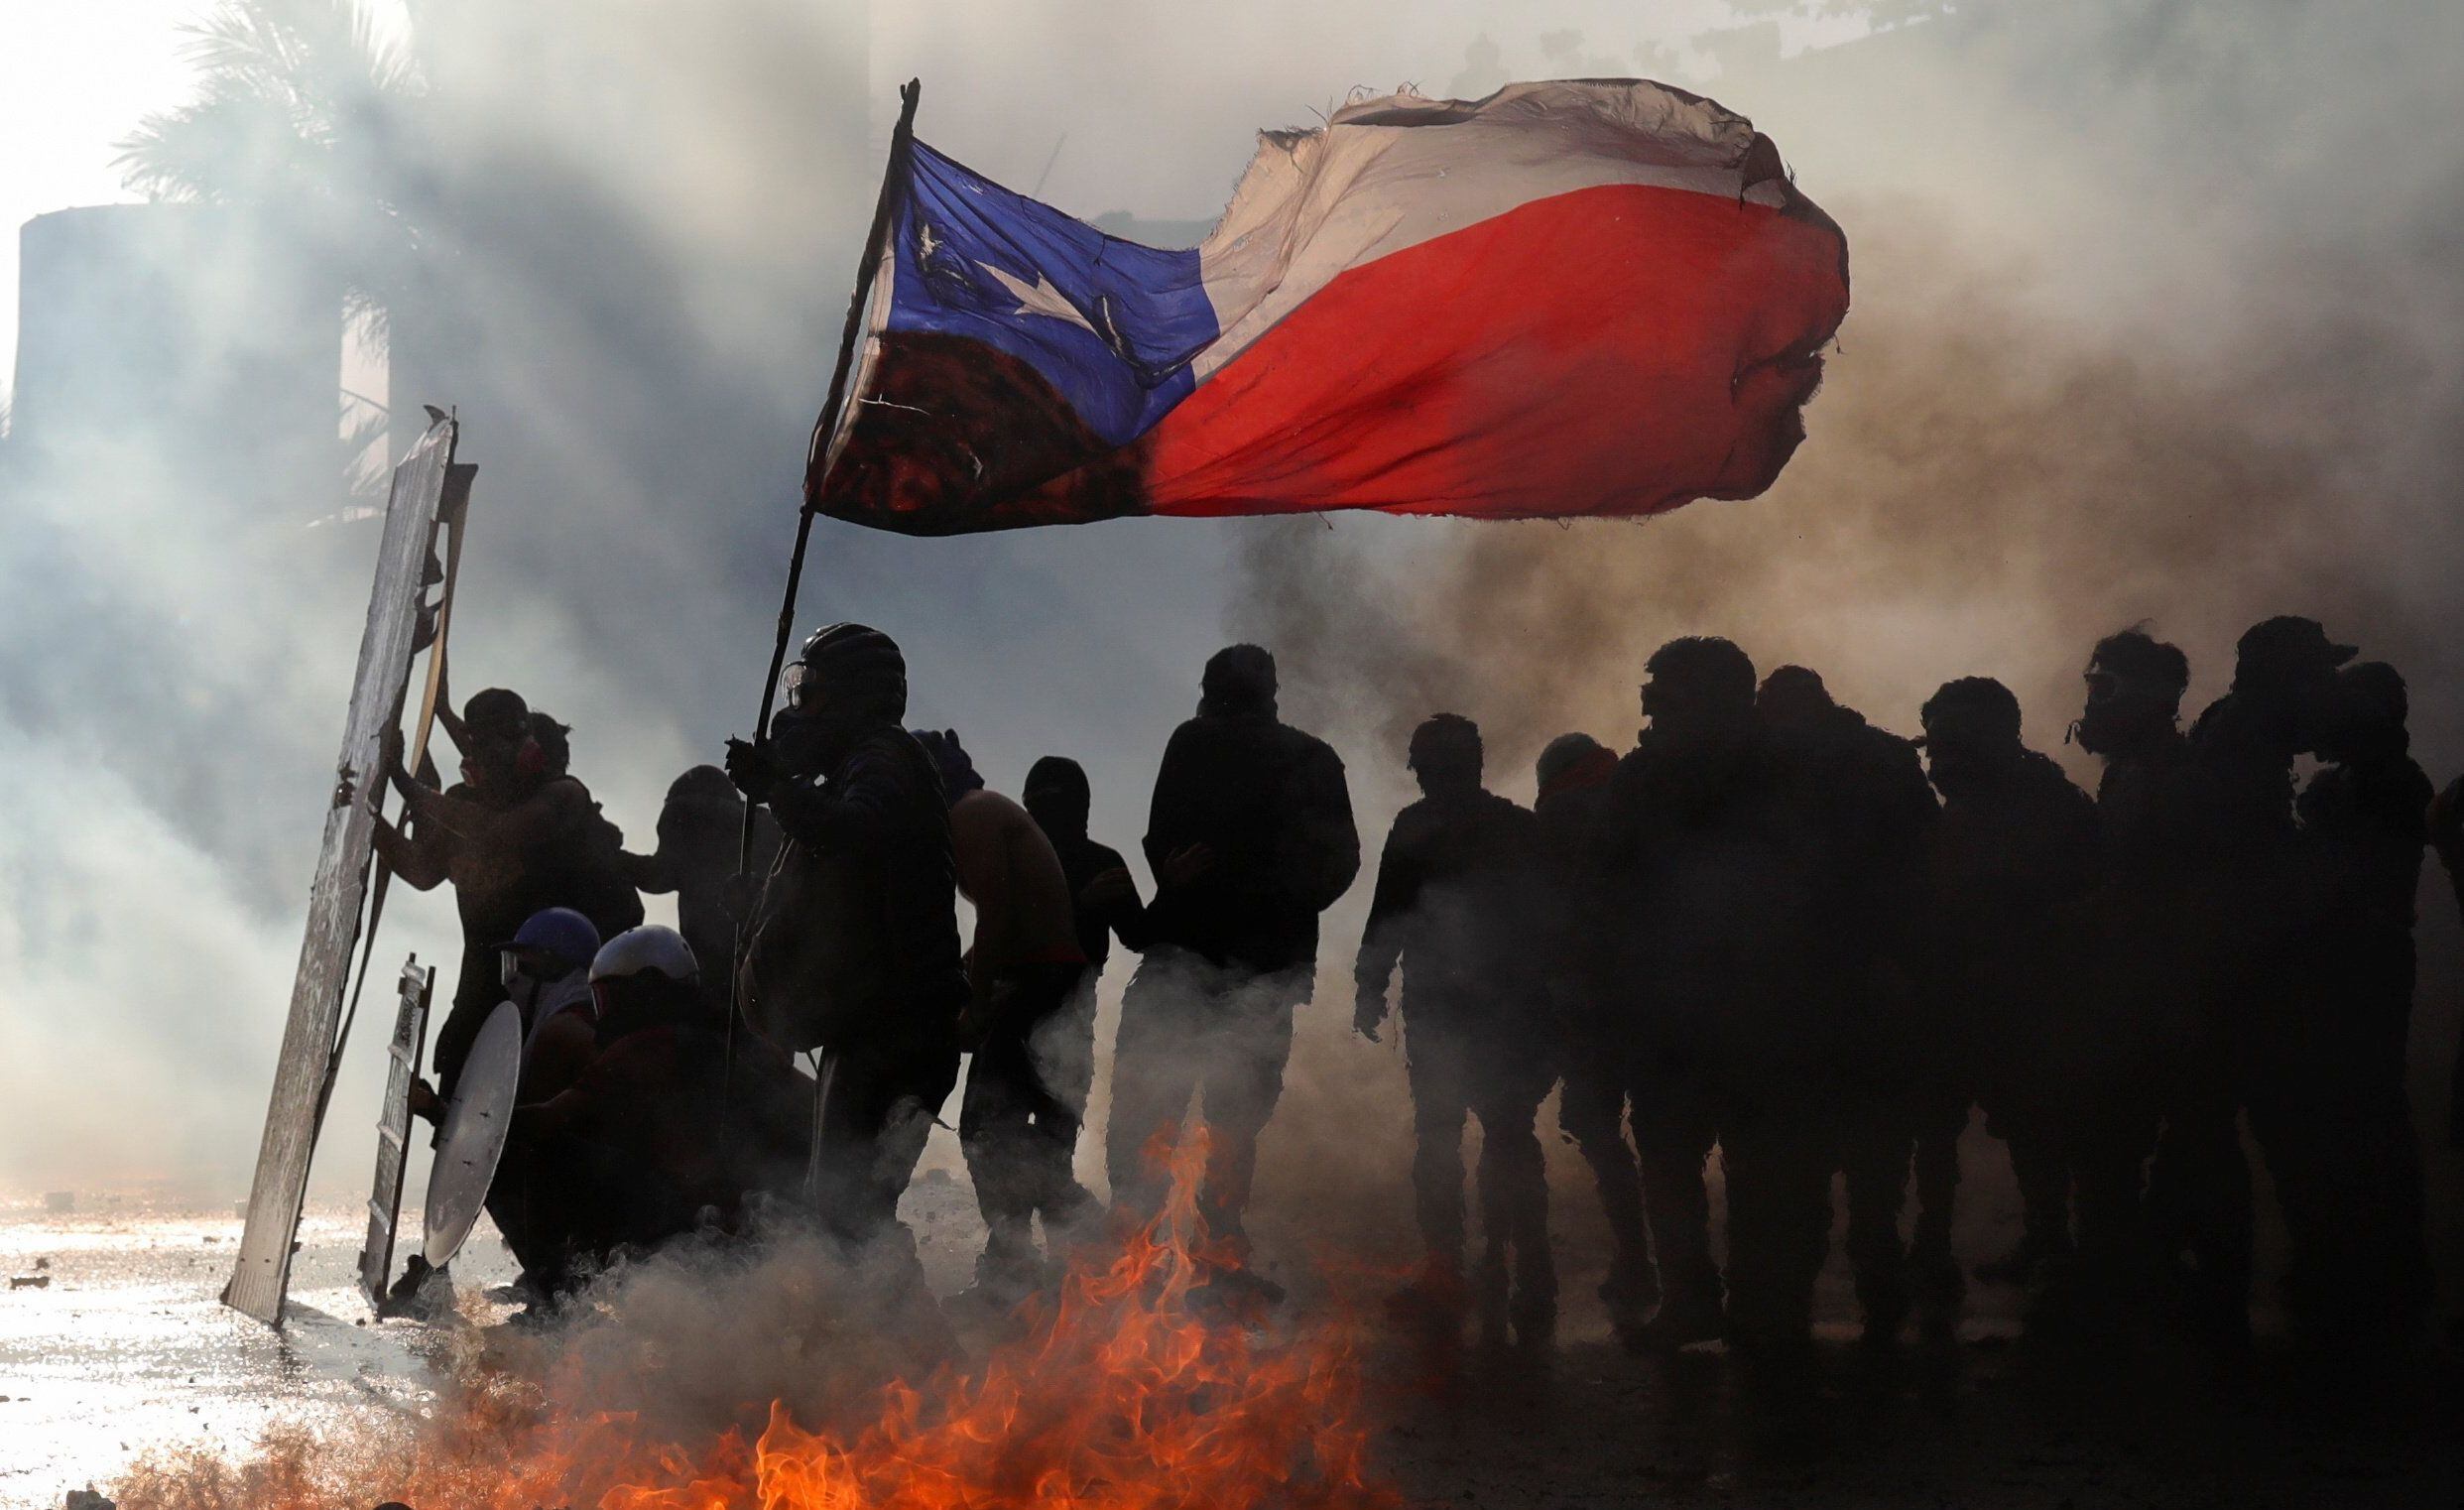 Un grupo de manifestantes chilenos protesta contra el régimen de Sebastián Piñera. (REUTERS/Pablo Sanhueza).